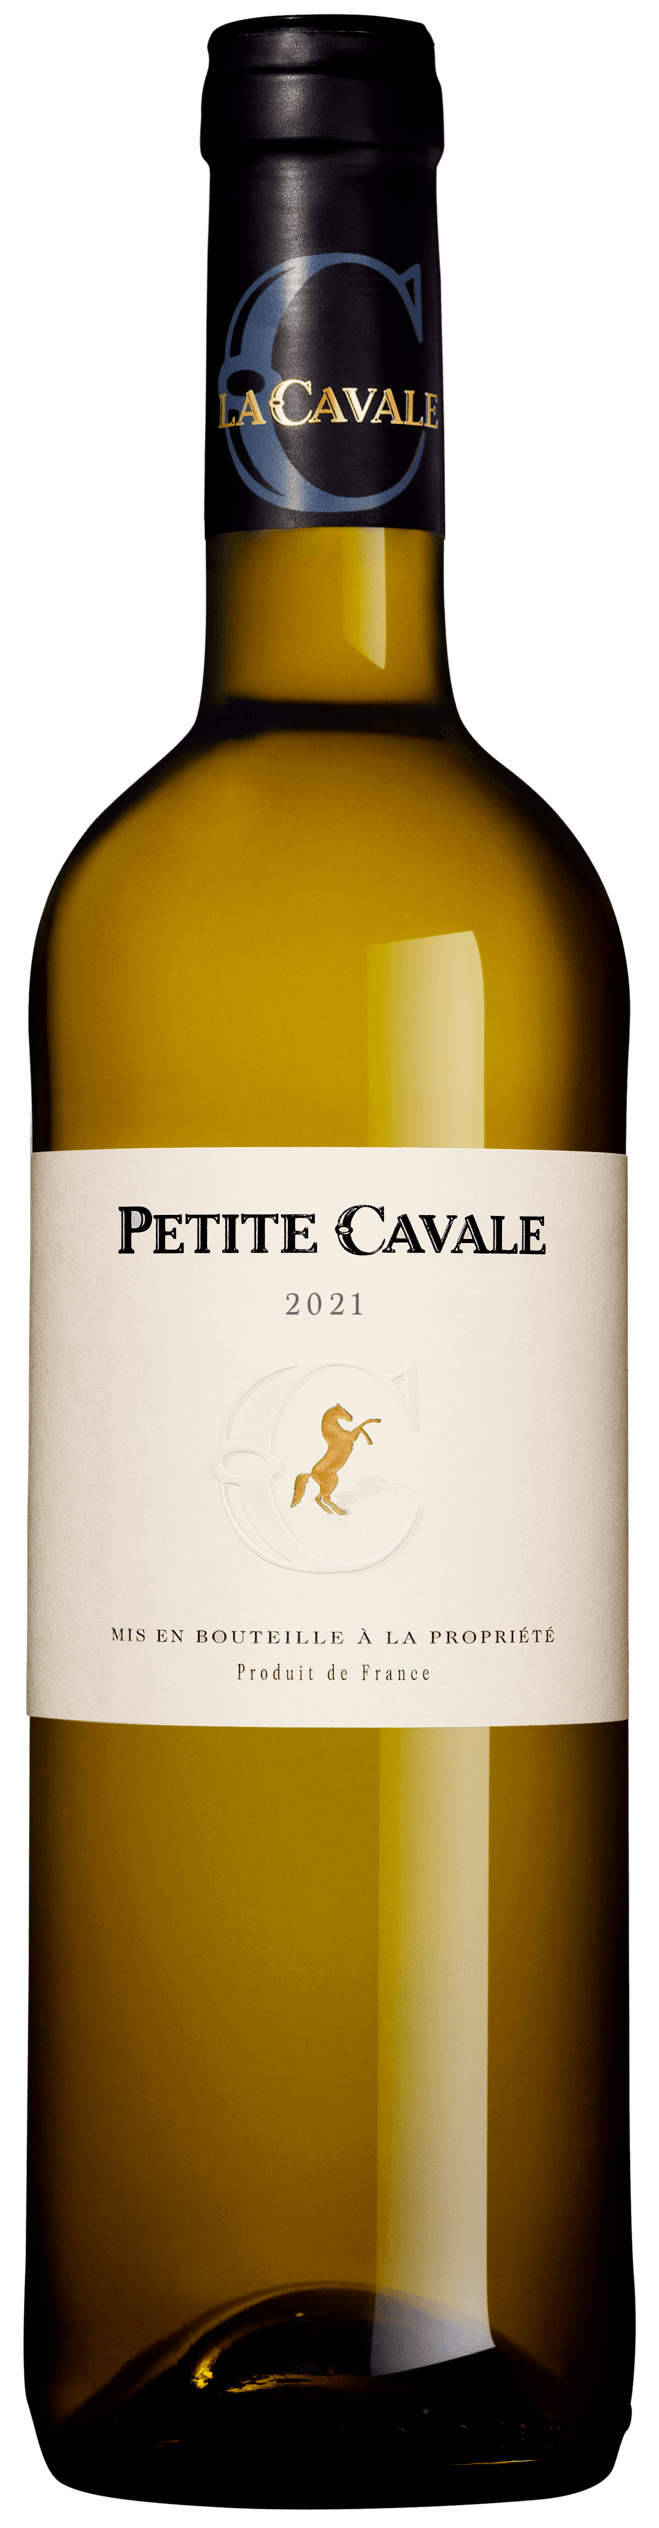 Petite Cavale blanc 2021 - Domaine La Cavale